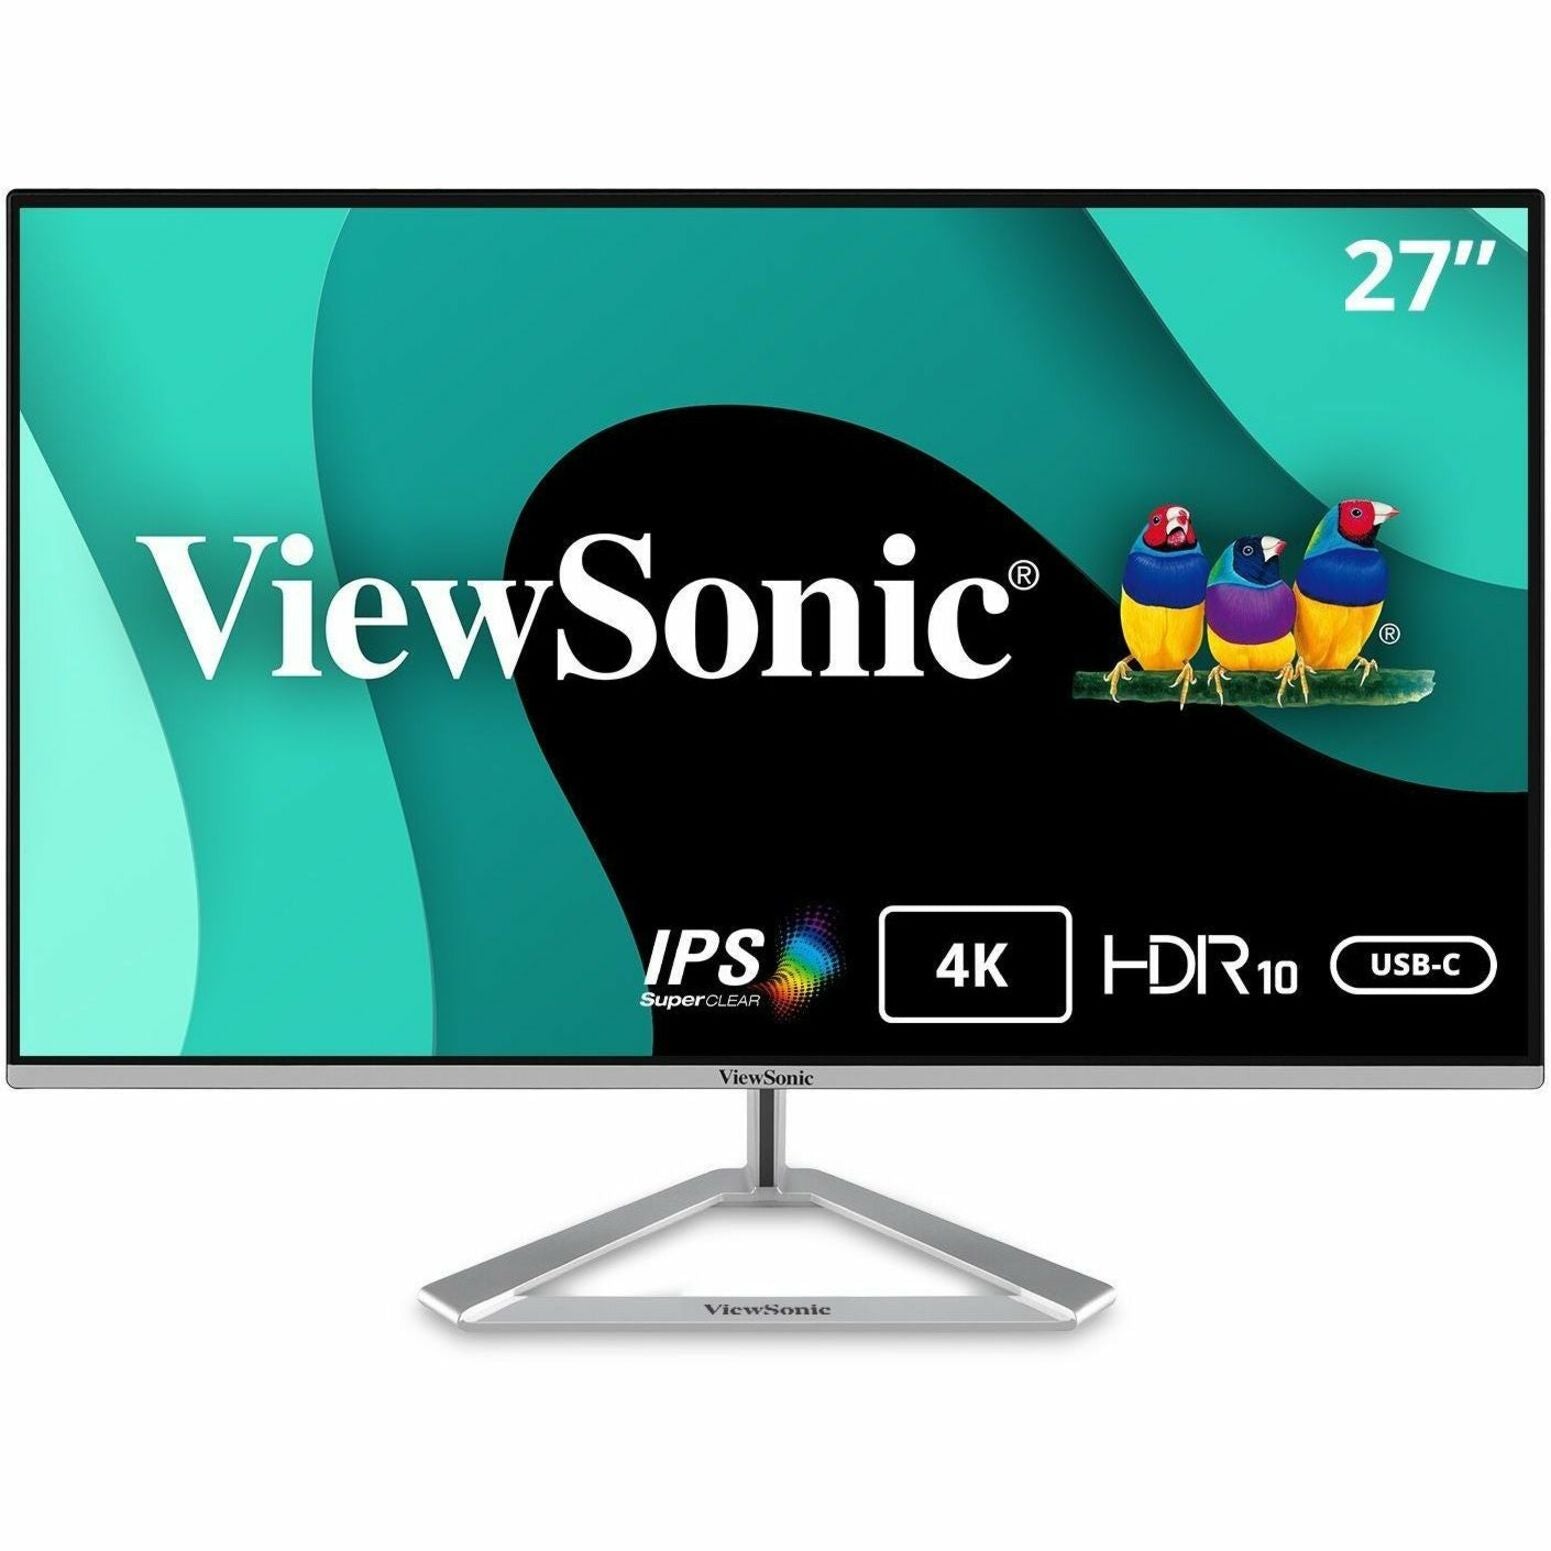 ViewSonic VX2776-4K-MHDU 27" 4K UHD Thin-Bezel IPS Monitor with USB-C, HDMI, and DisplayPort, 1ms Response Time, 350 Nit Brightness, 1.07 Billion Colors